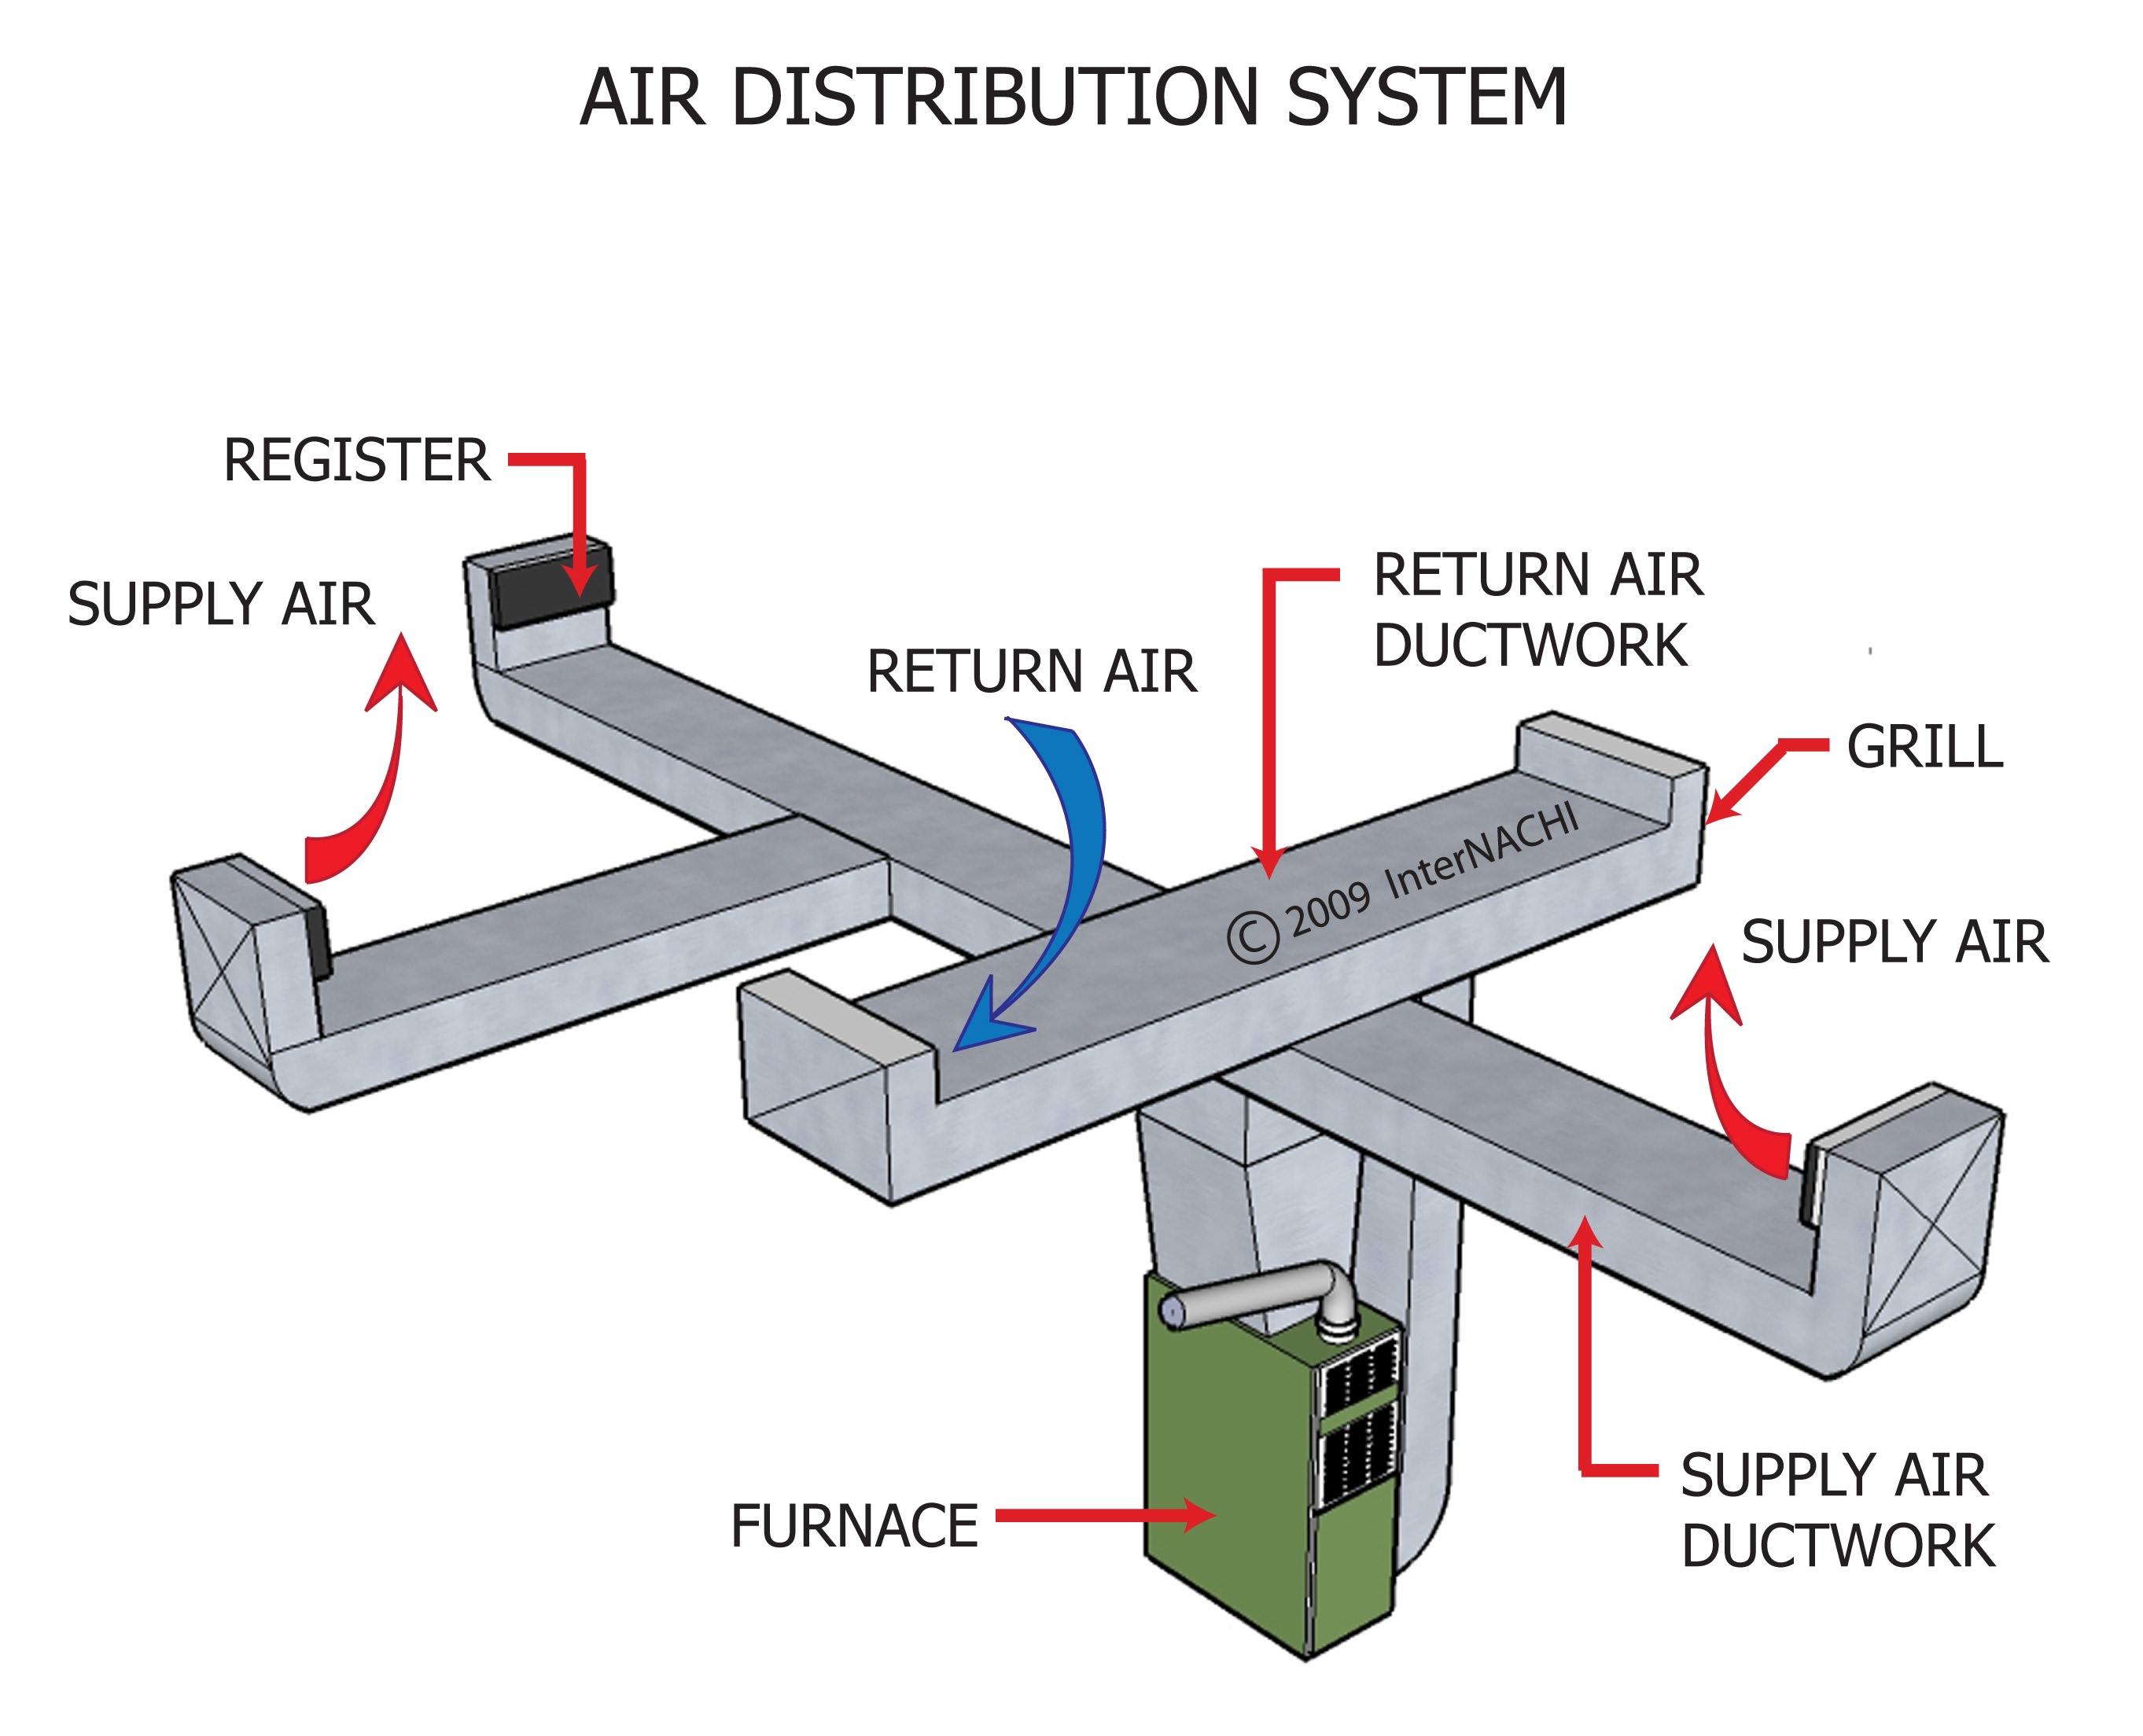 Air distribution system.